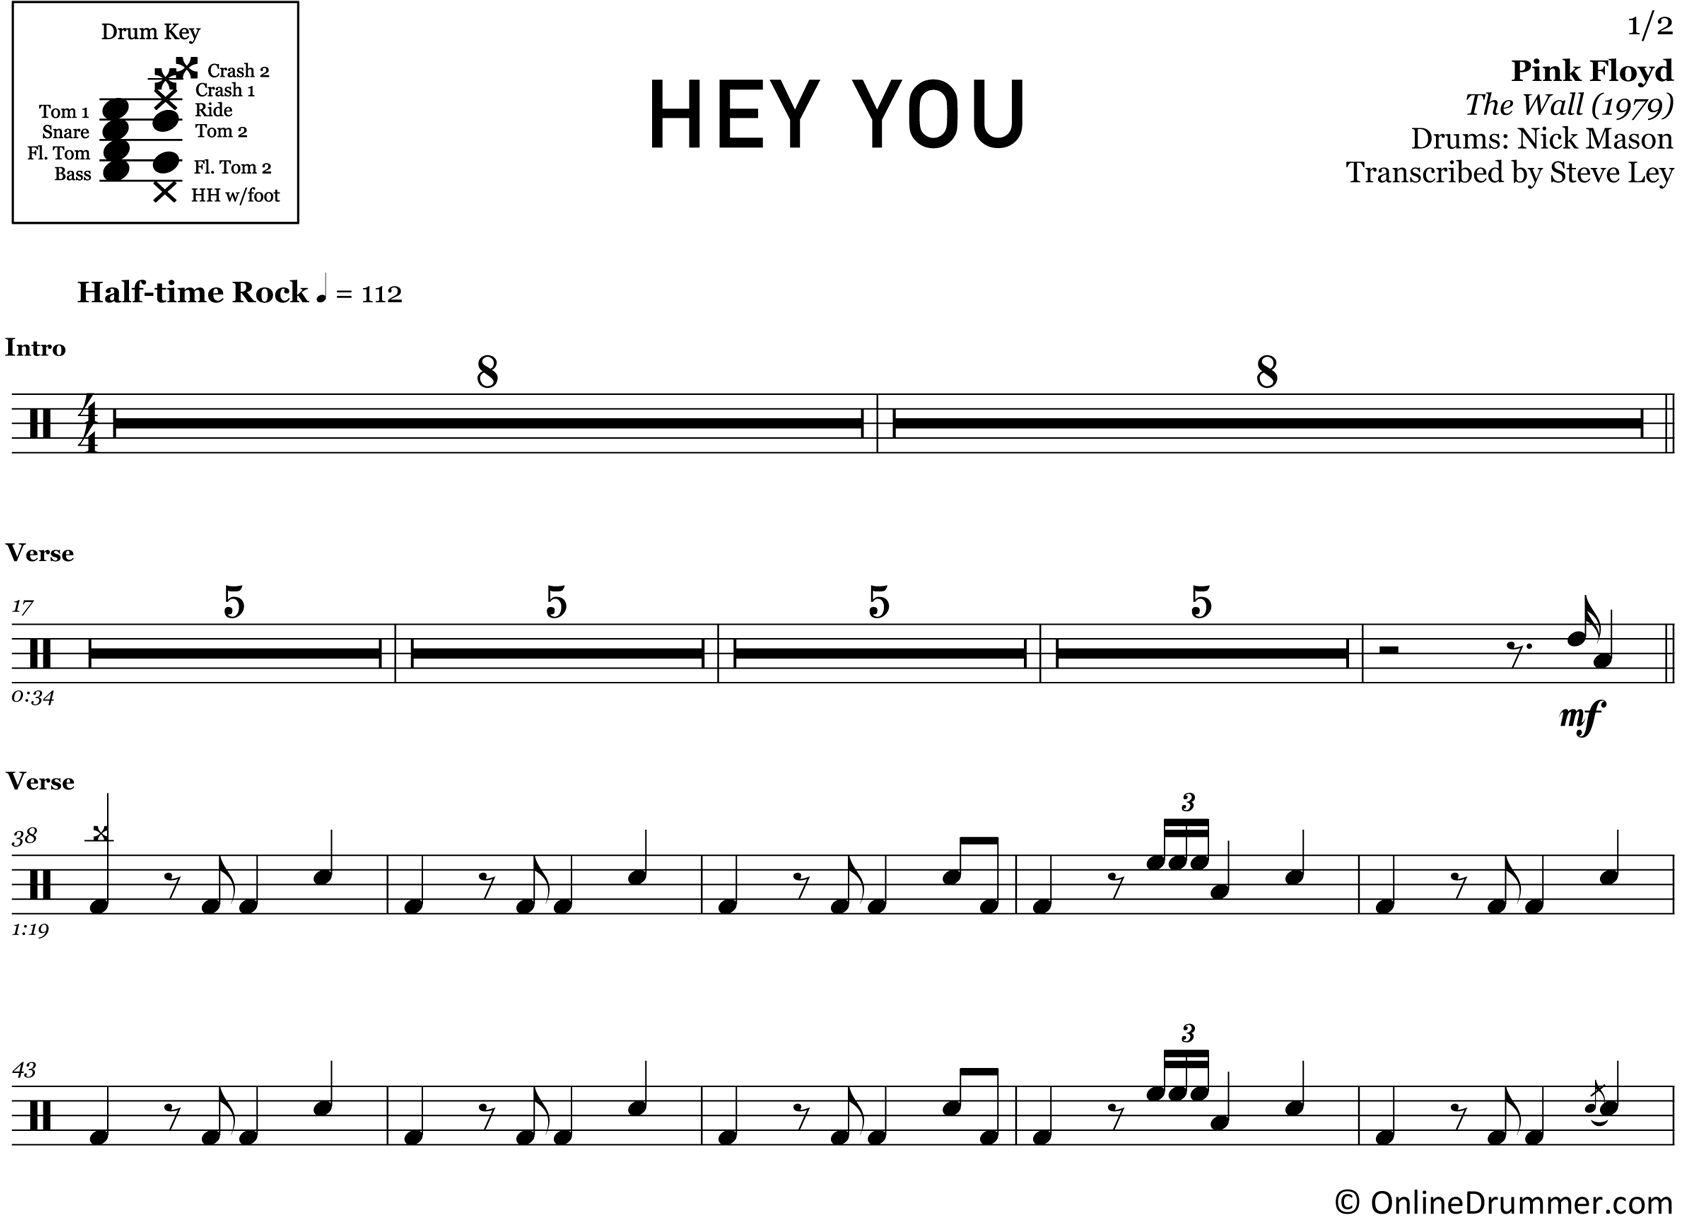 Pink Floyd - Hey You (Lyrics) 